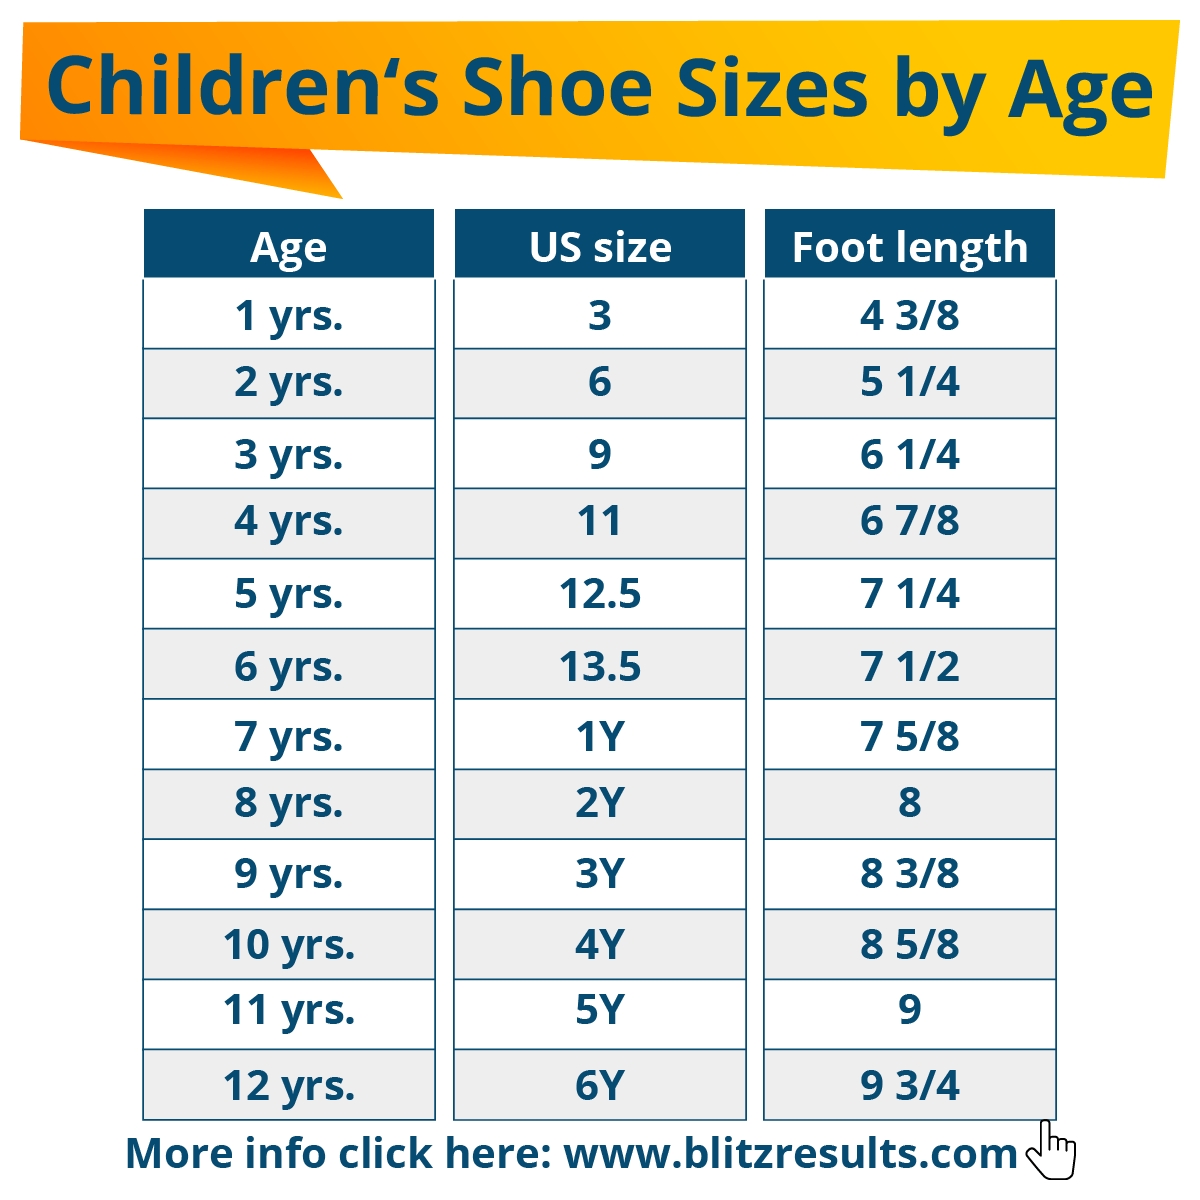 7 Photos Kids Shoes Sizes And Review - Alqu Blog